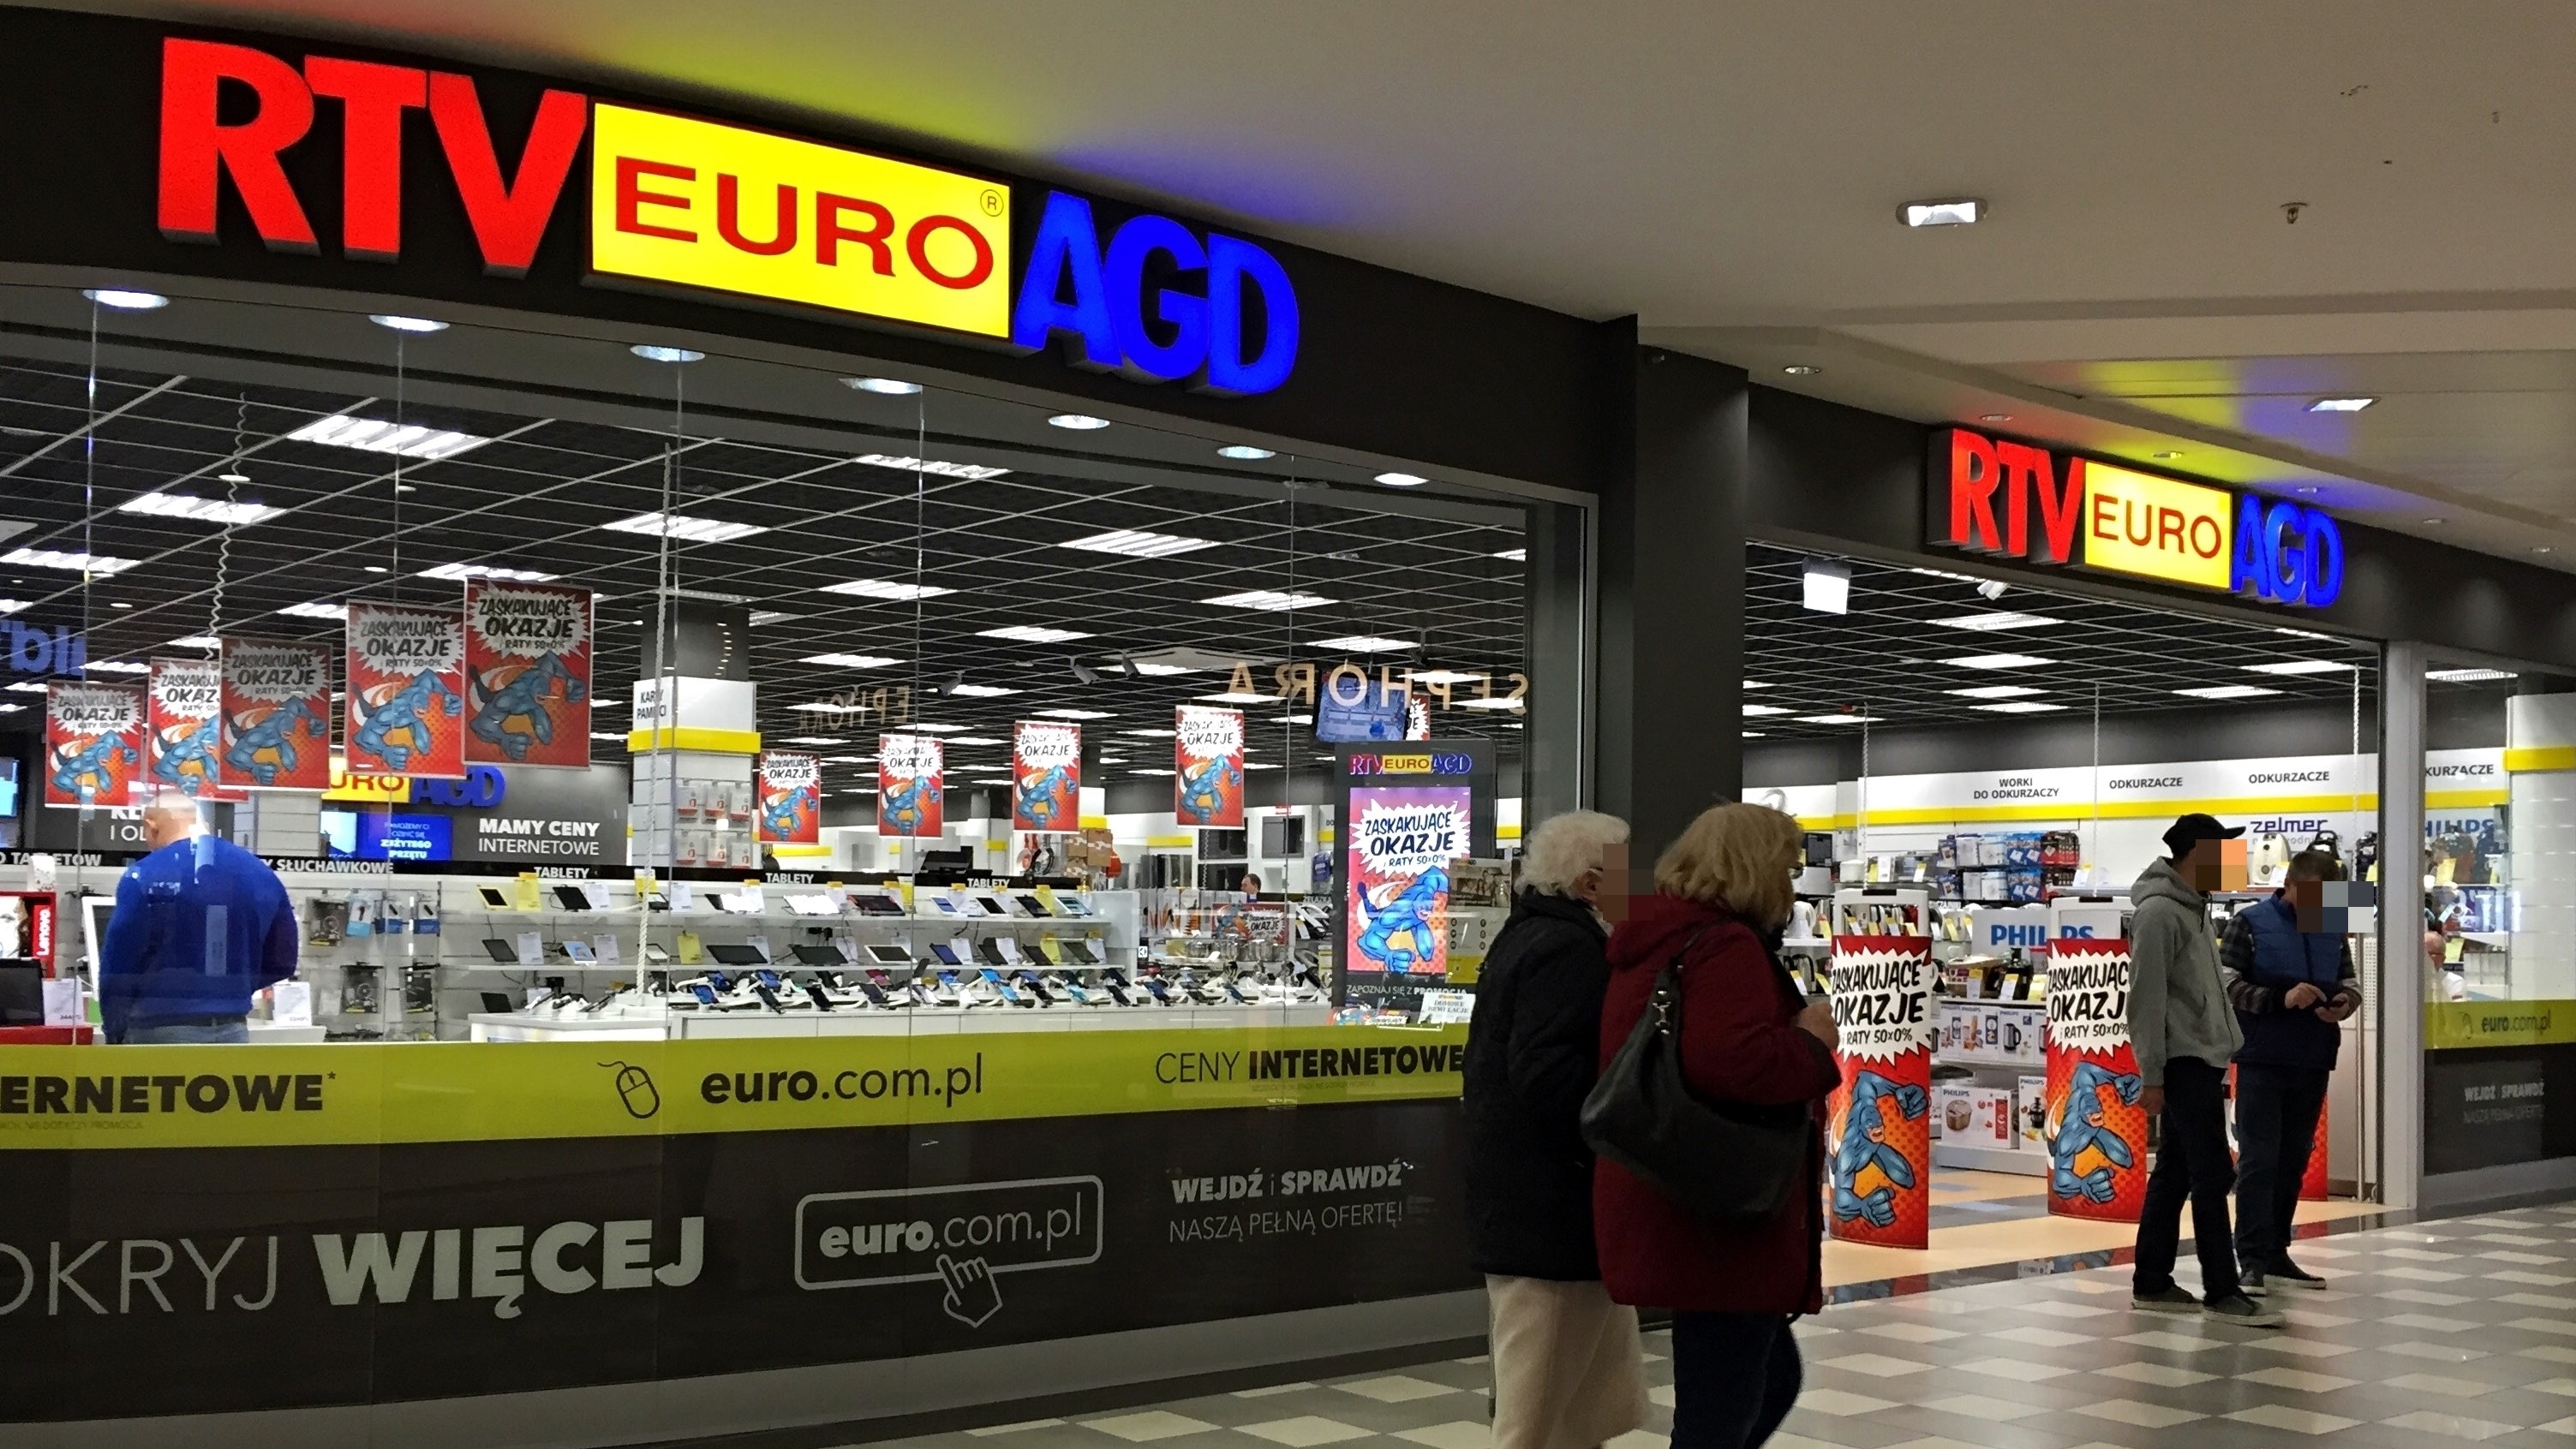 RTV Euro AGD otwarte mimo obostrzeń! Które sklepy są otwarte